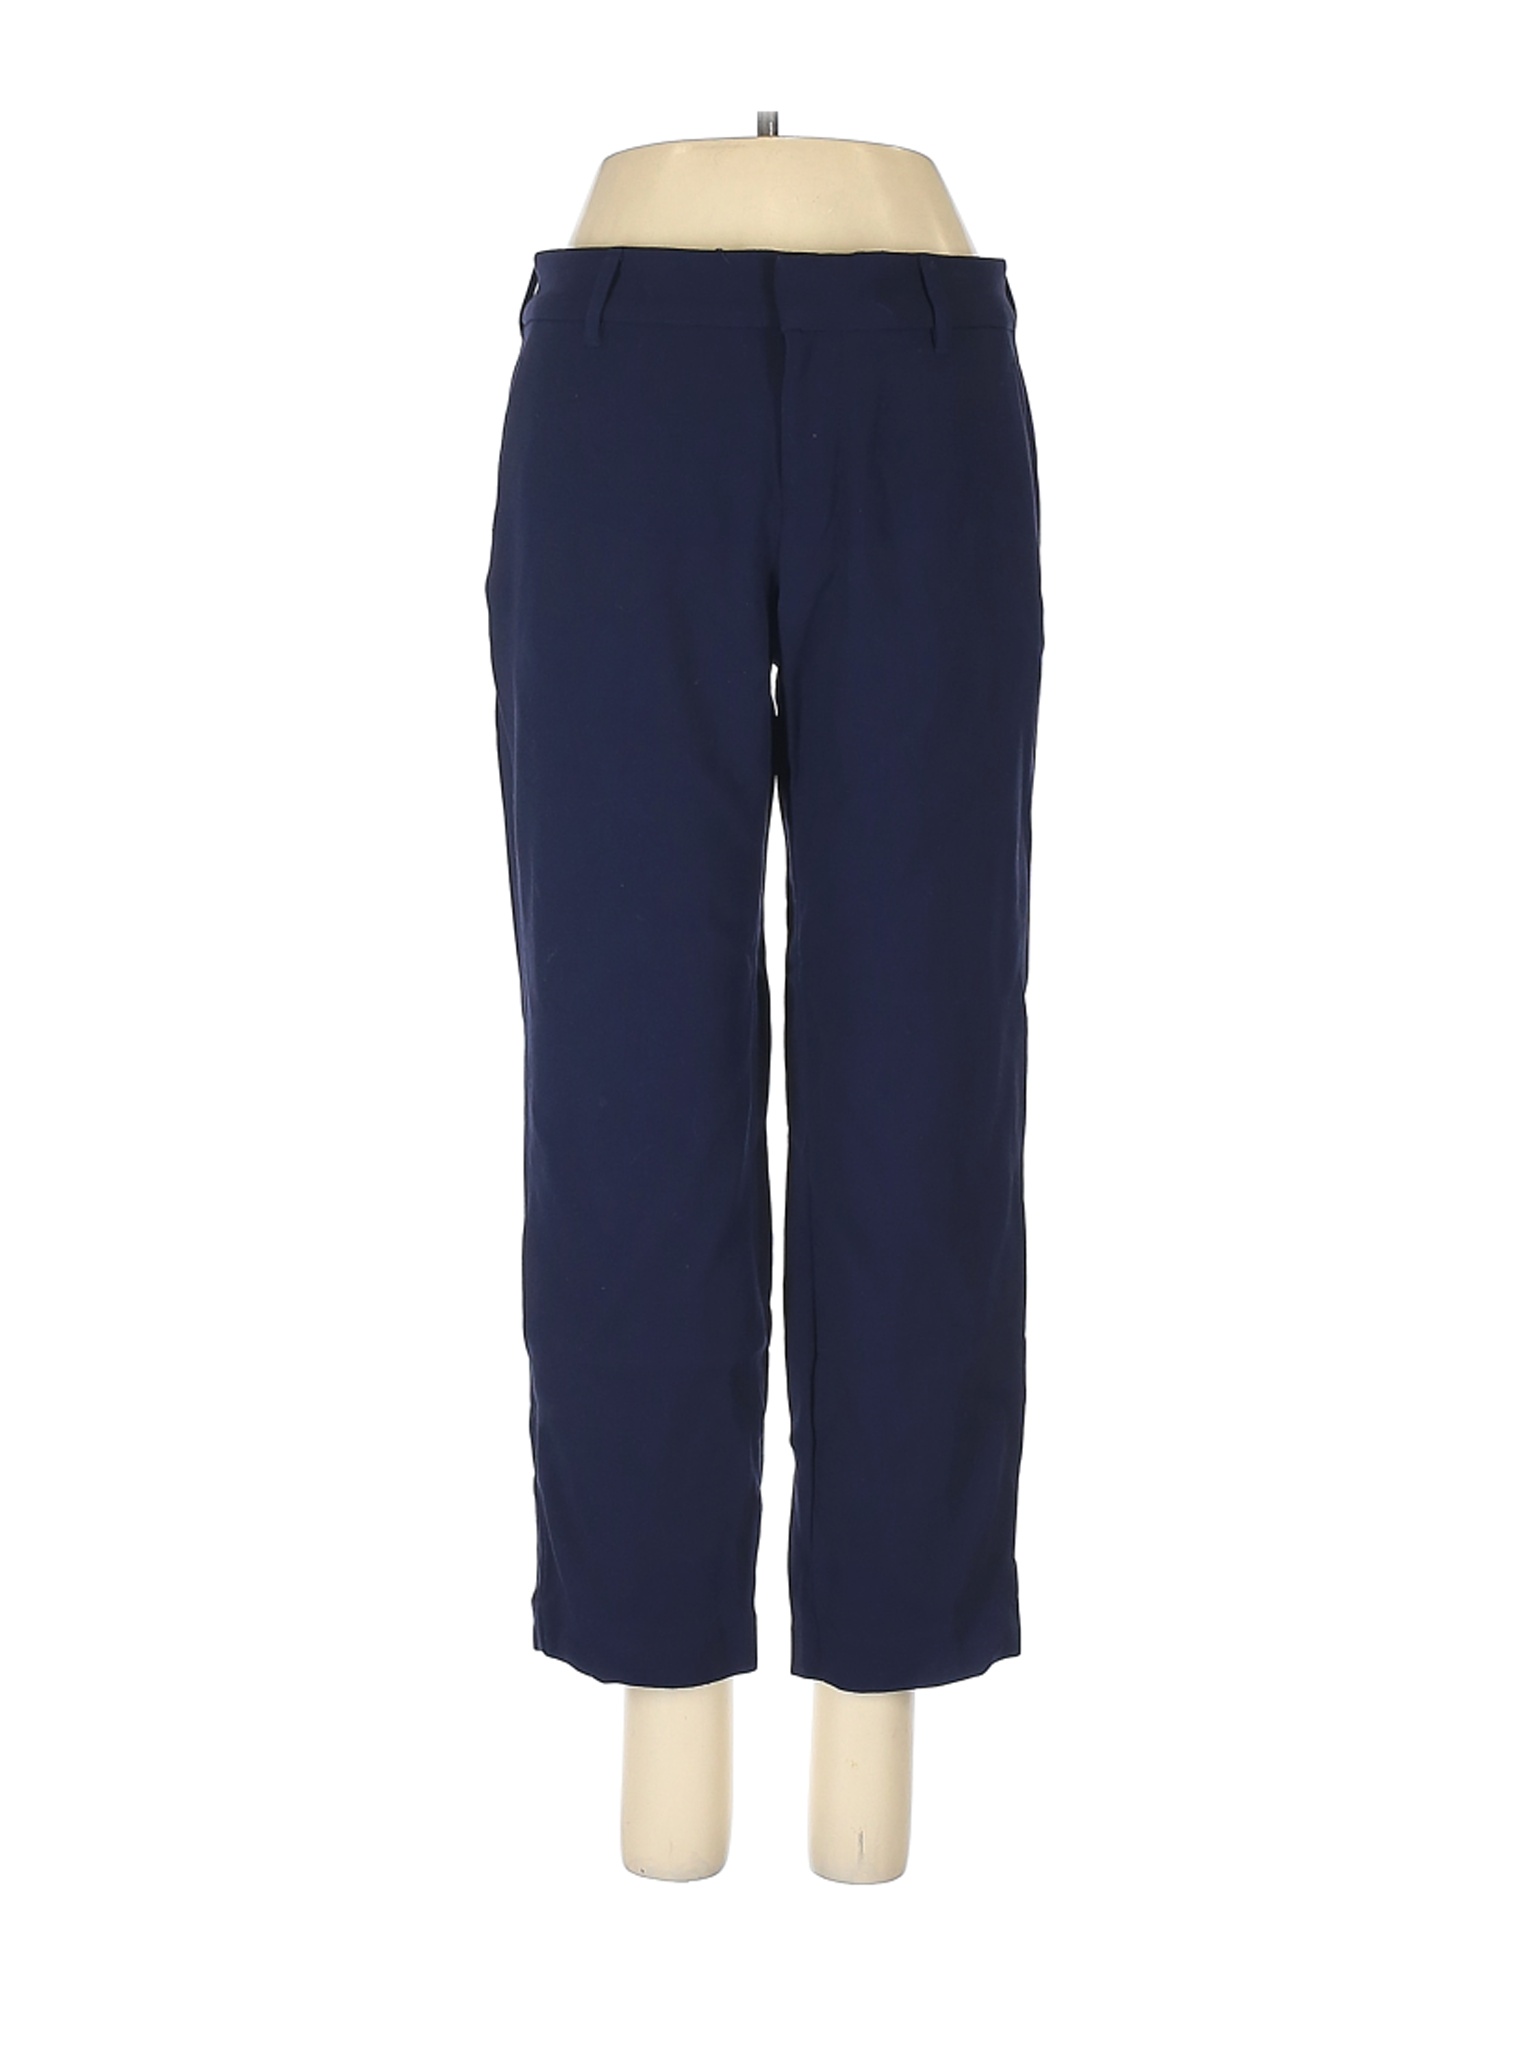 Old Navy Women Blue Casual Pants 2 | eBay